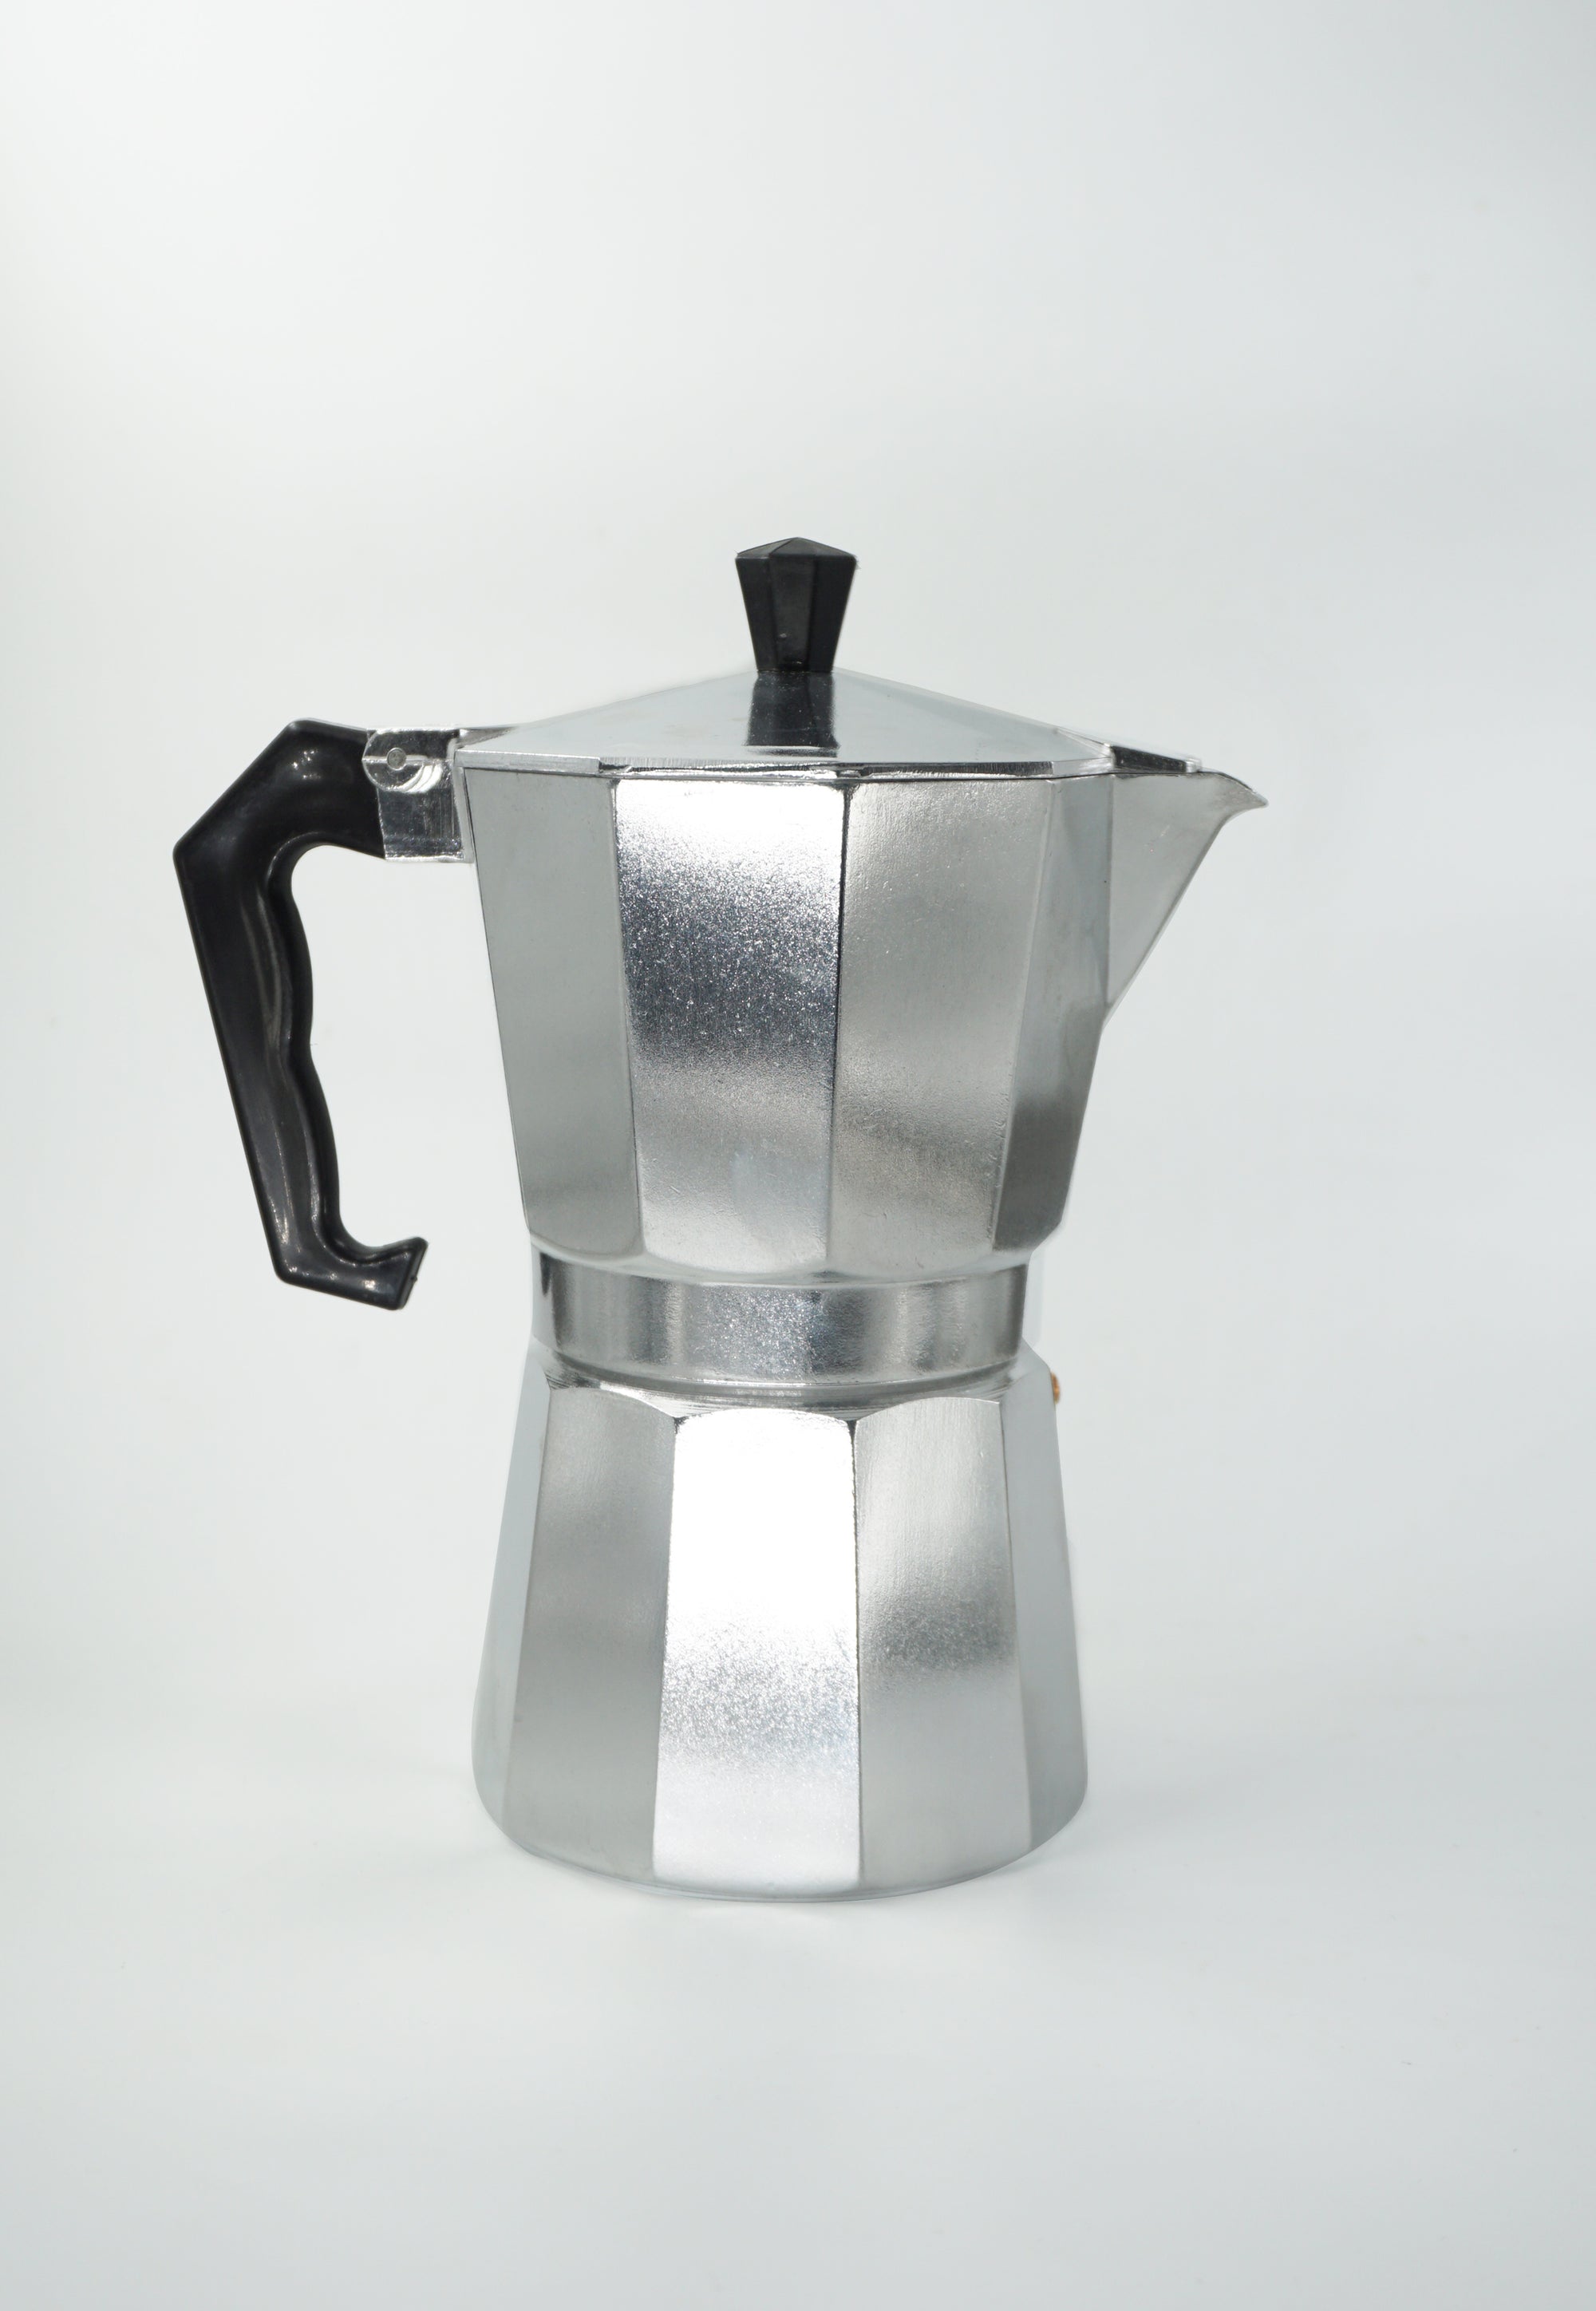 300ml Moka Pot: Authentic Stovetop Coffee Maker